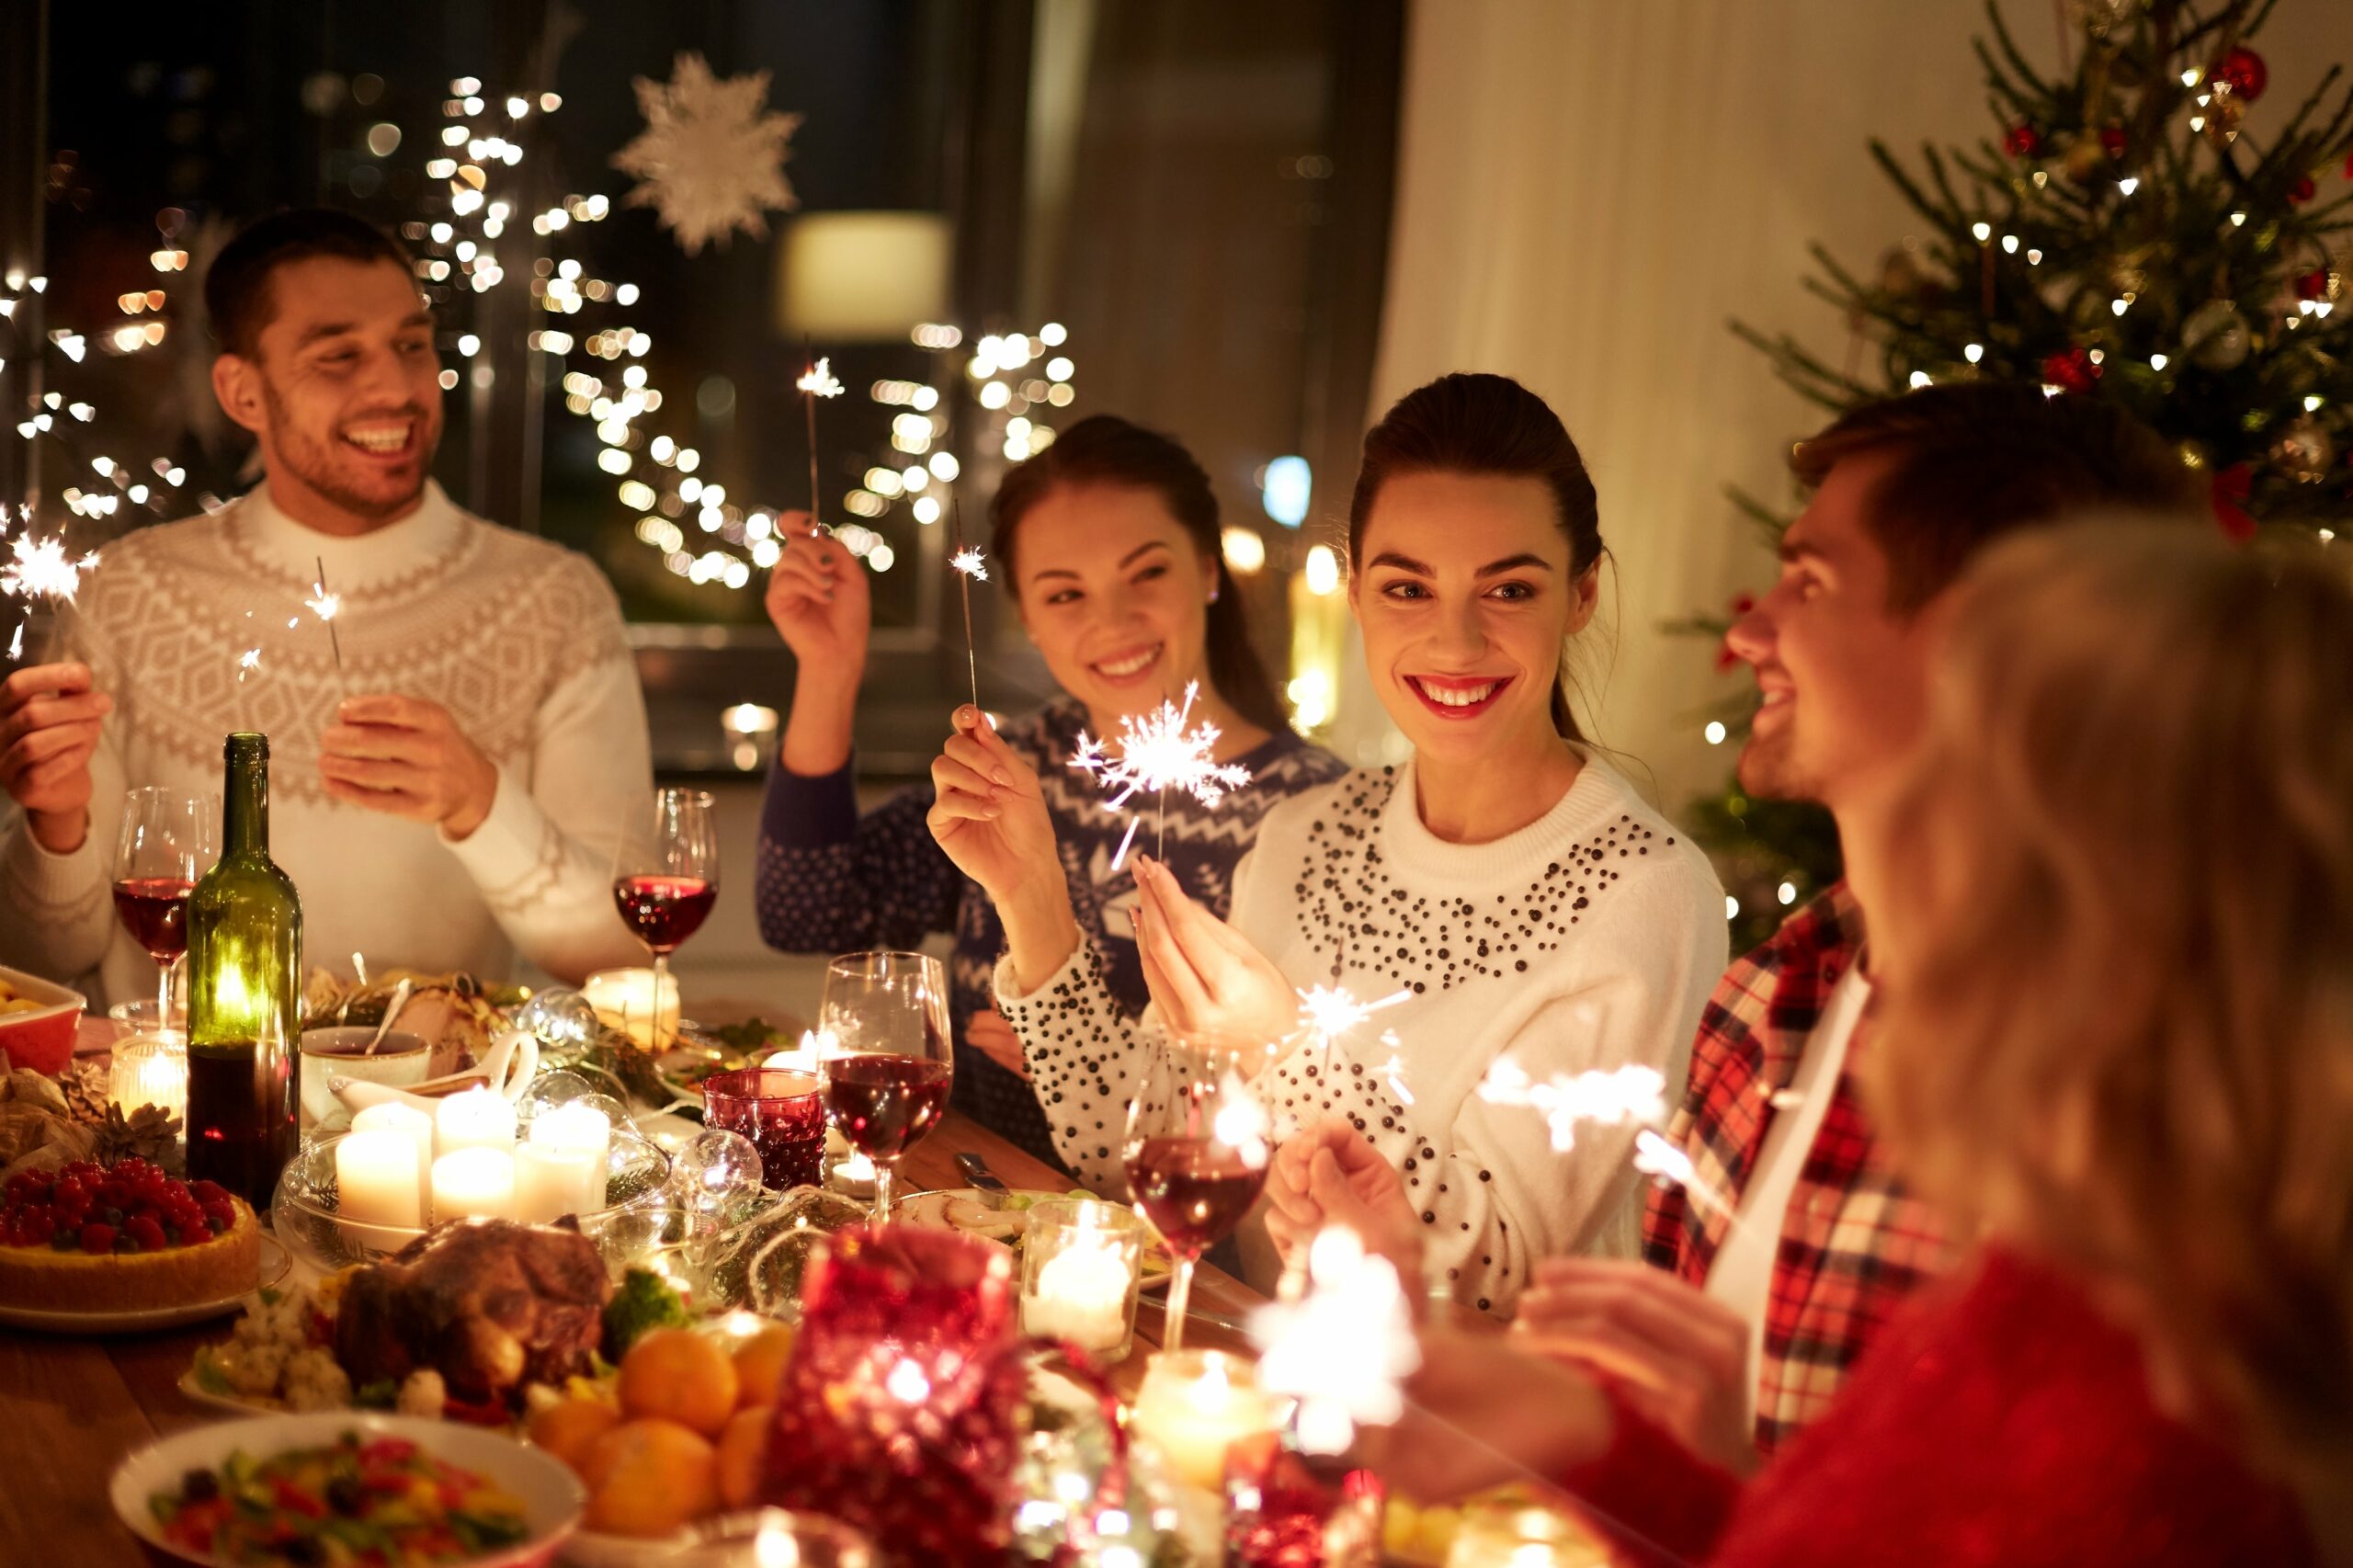 How to Use US Hispanic Audience Segmentation for the Holiday Season